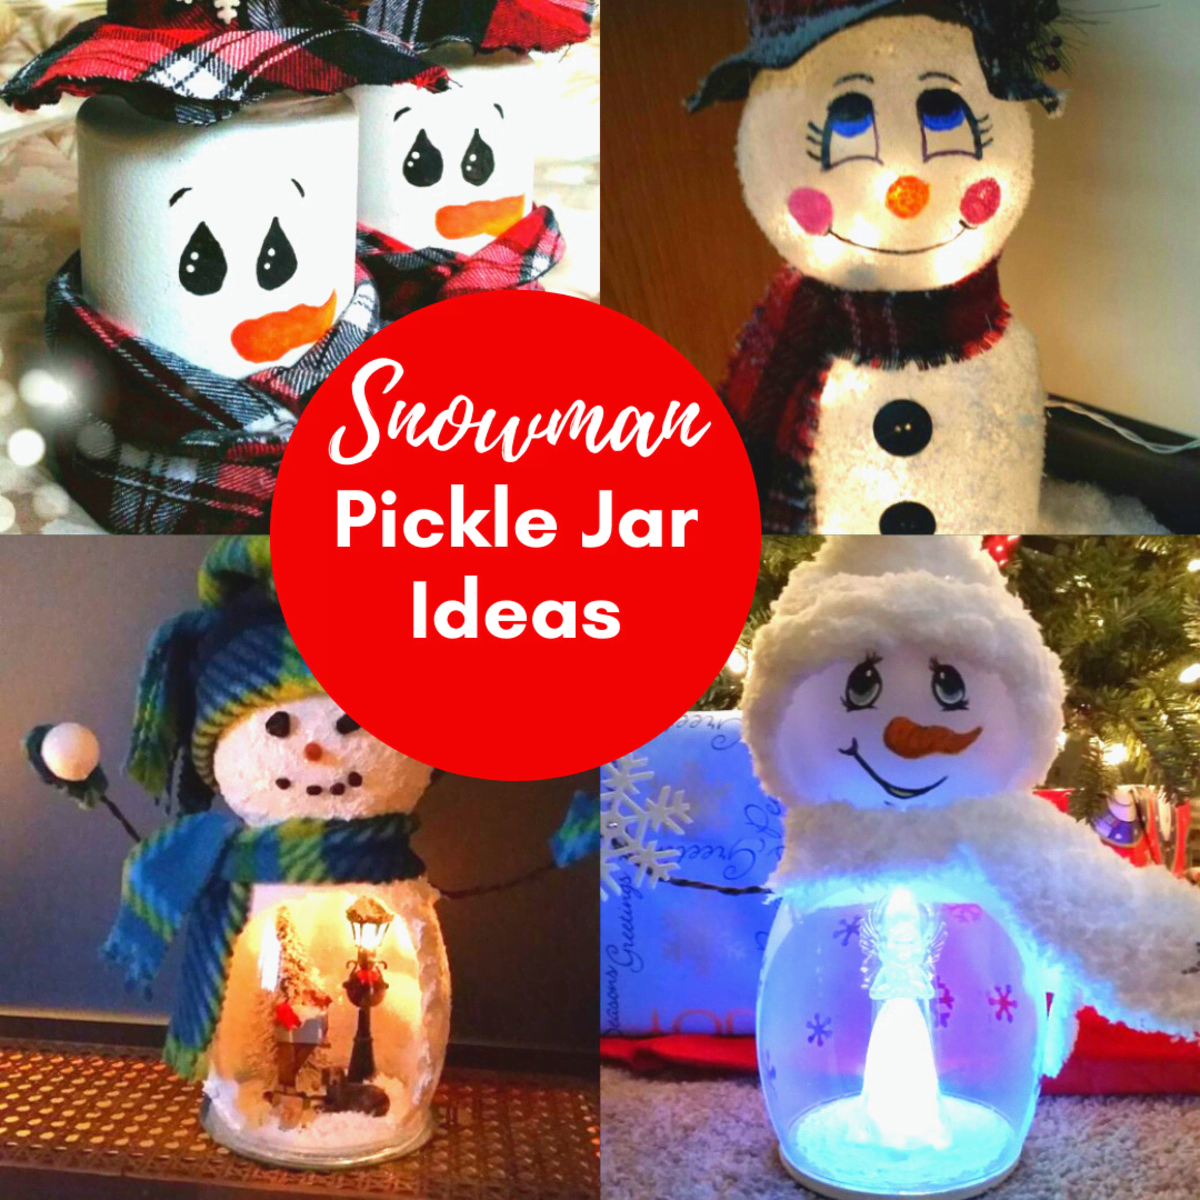 https://images.saymedia-content.com/.image/ar_1:1%2Cc_fill%2Ccs_srgb%2Cq_auto:eco%2Cw_1200/MTc2Mjg2MDEzMjcyOTU4MTQy/pickle-jar-snowman-christmas-crafts.png